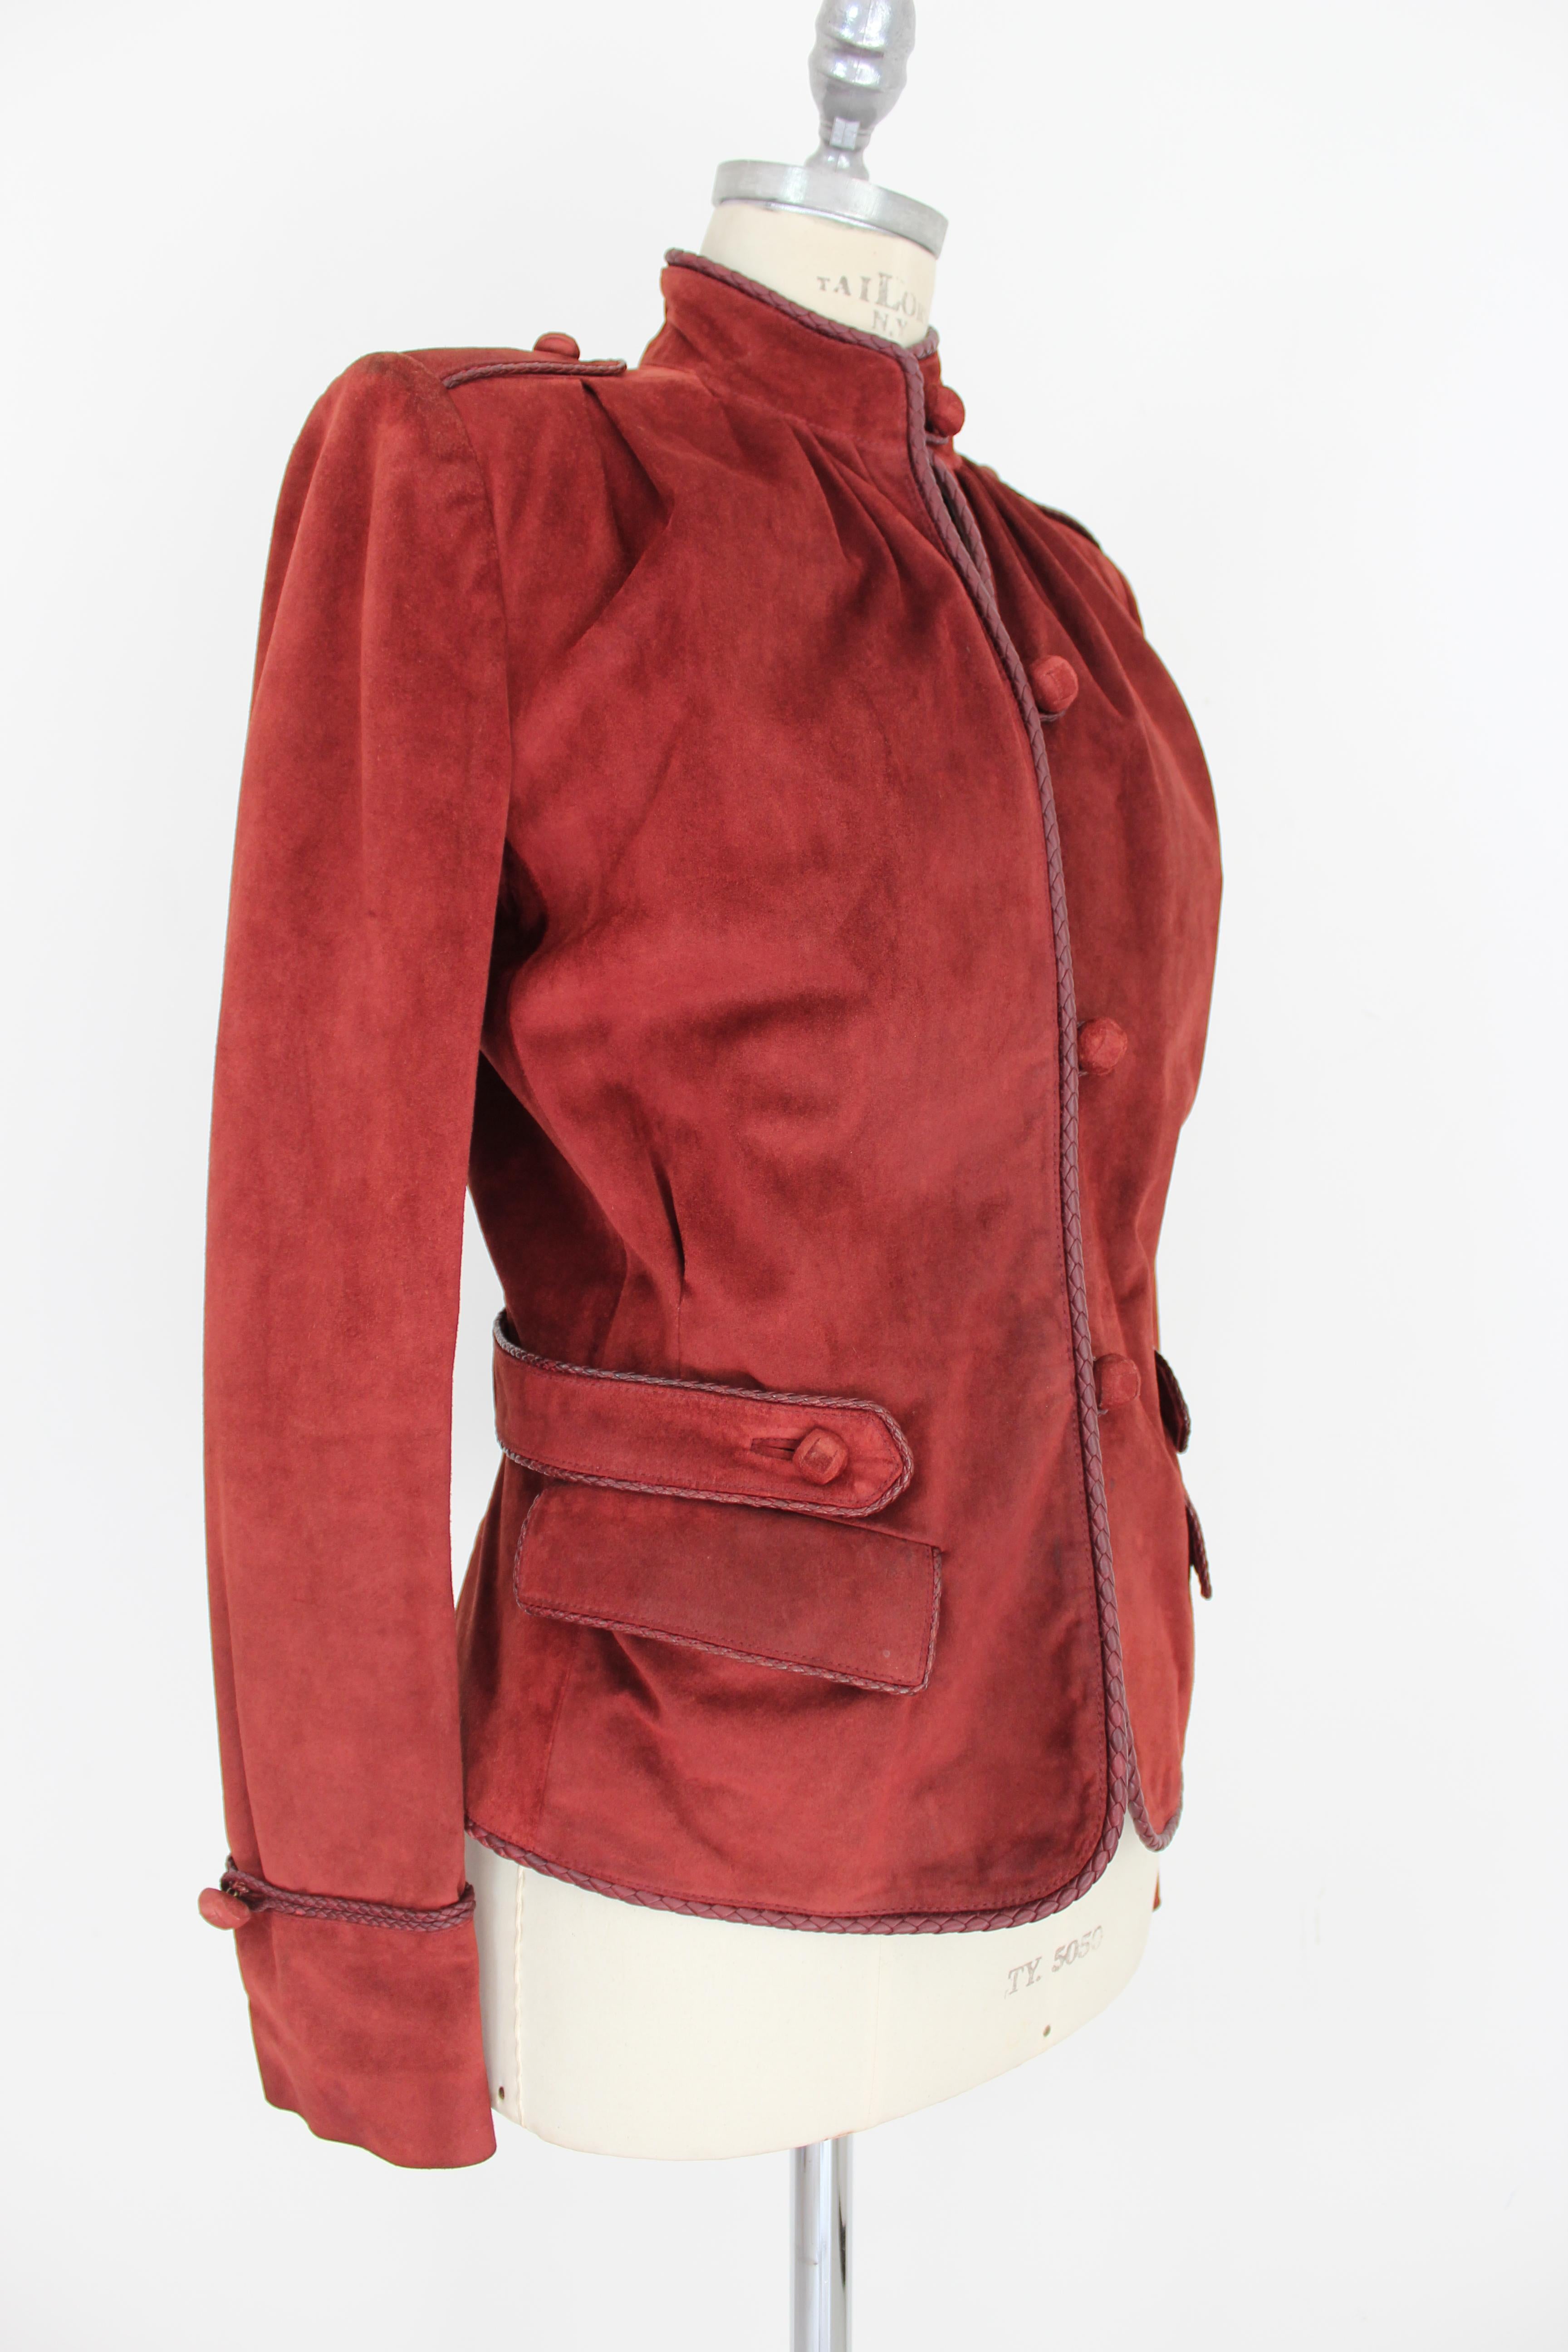 Yves Saint Laurent Rive Gauche Burgundy Leather Jacket 2000s Mandarin Collar In Excellent Condition In Brindisi, Bt